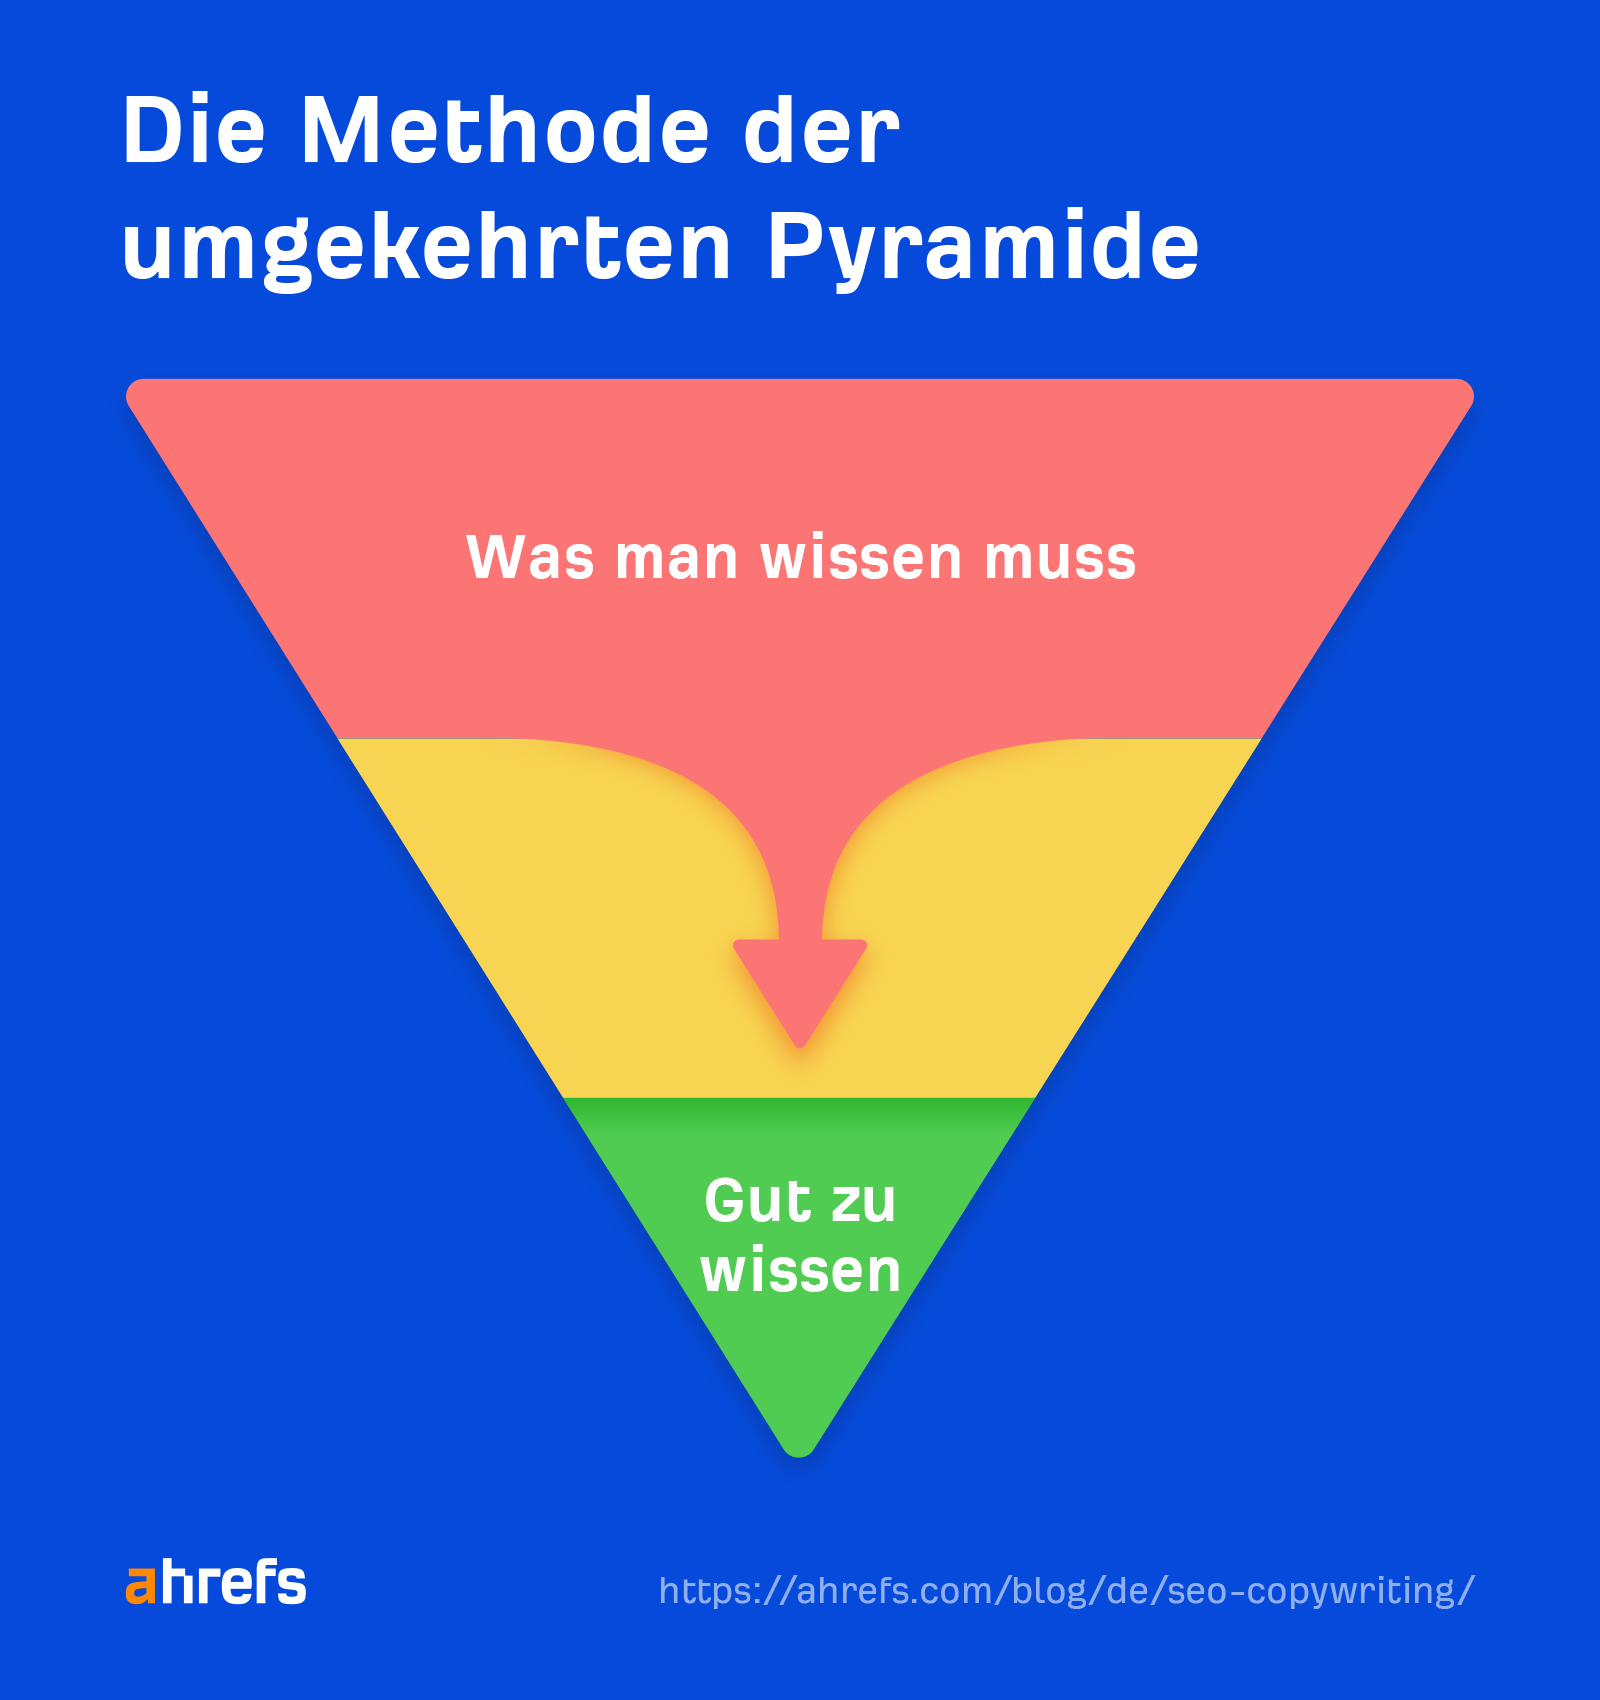 The Inverted Pyramid method
